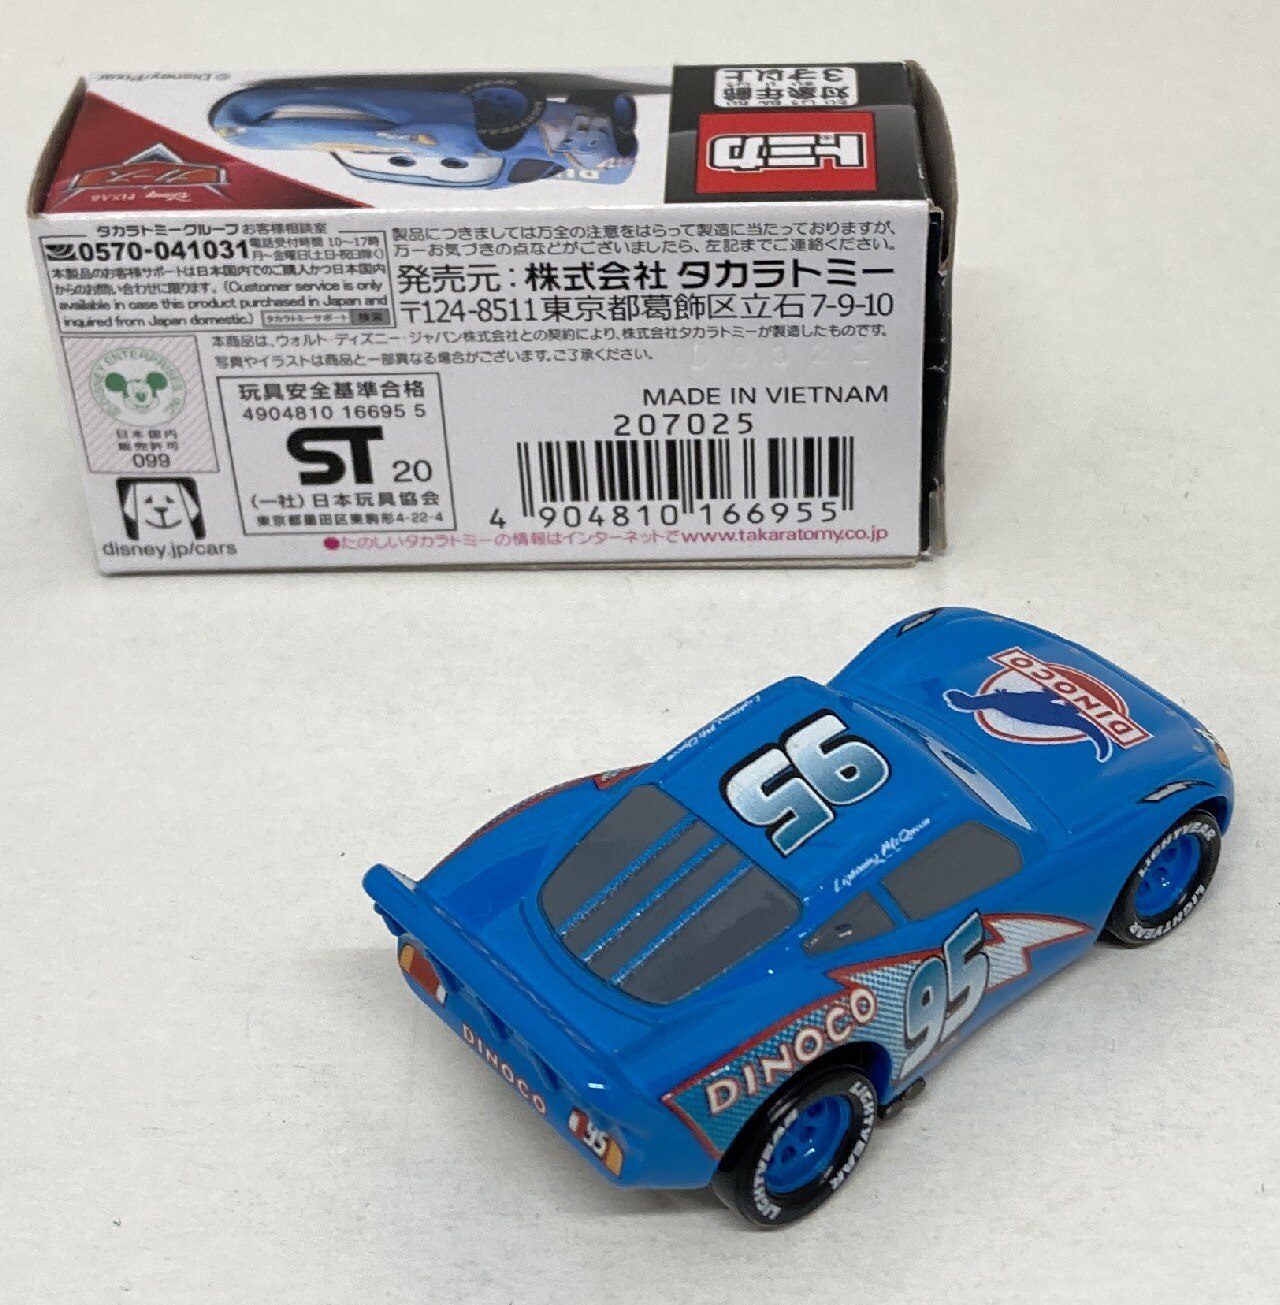 Mini Car Lightning McQueen Dinoco Type Cars TOMICA C 02 - Meccha Japan